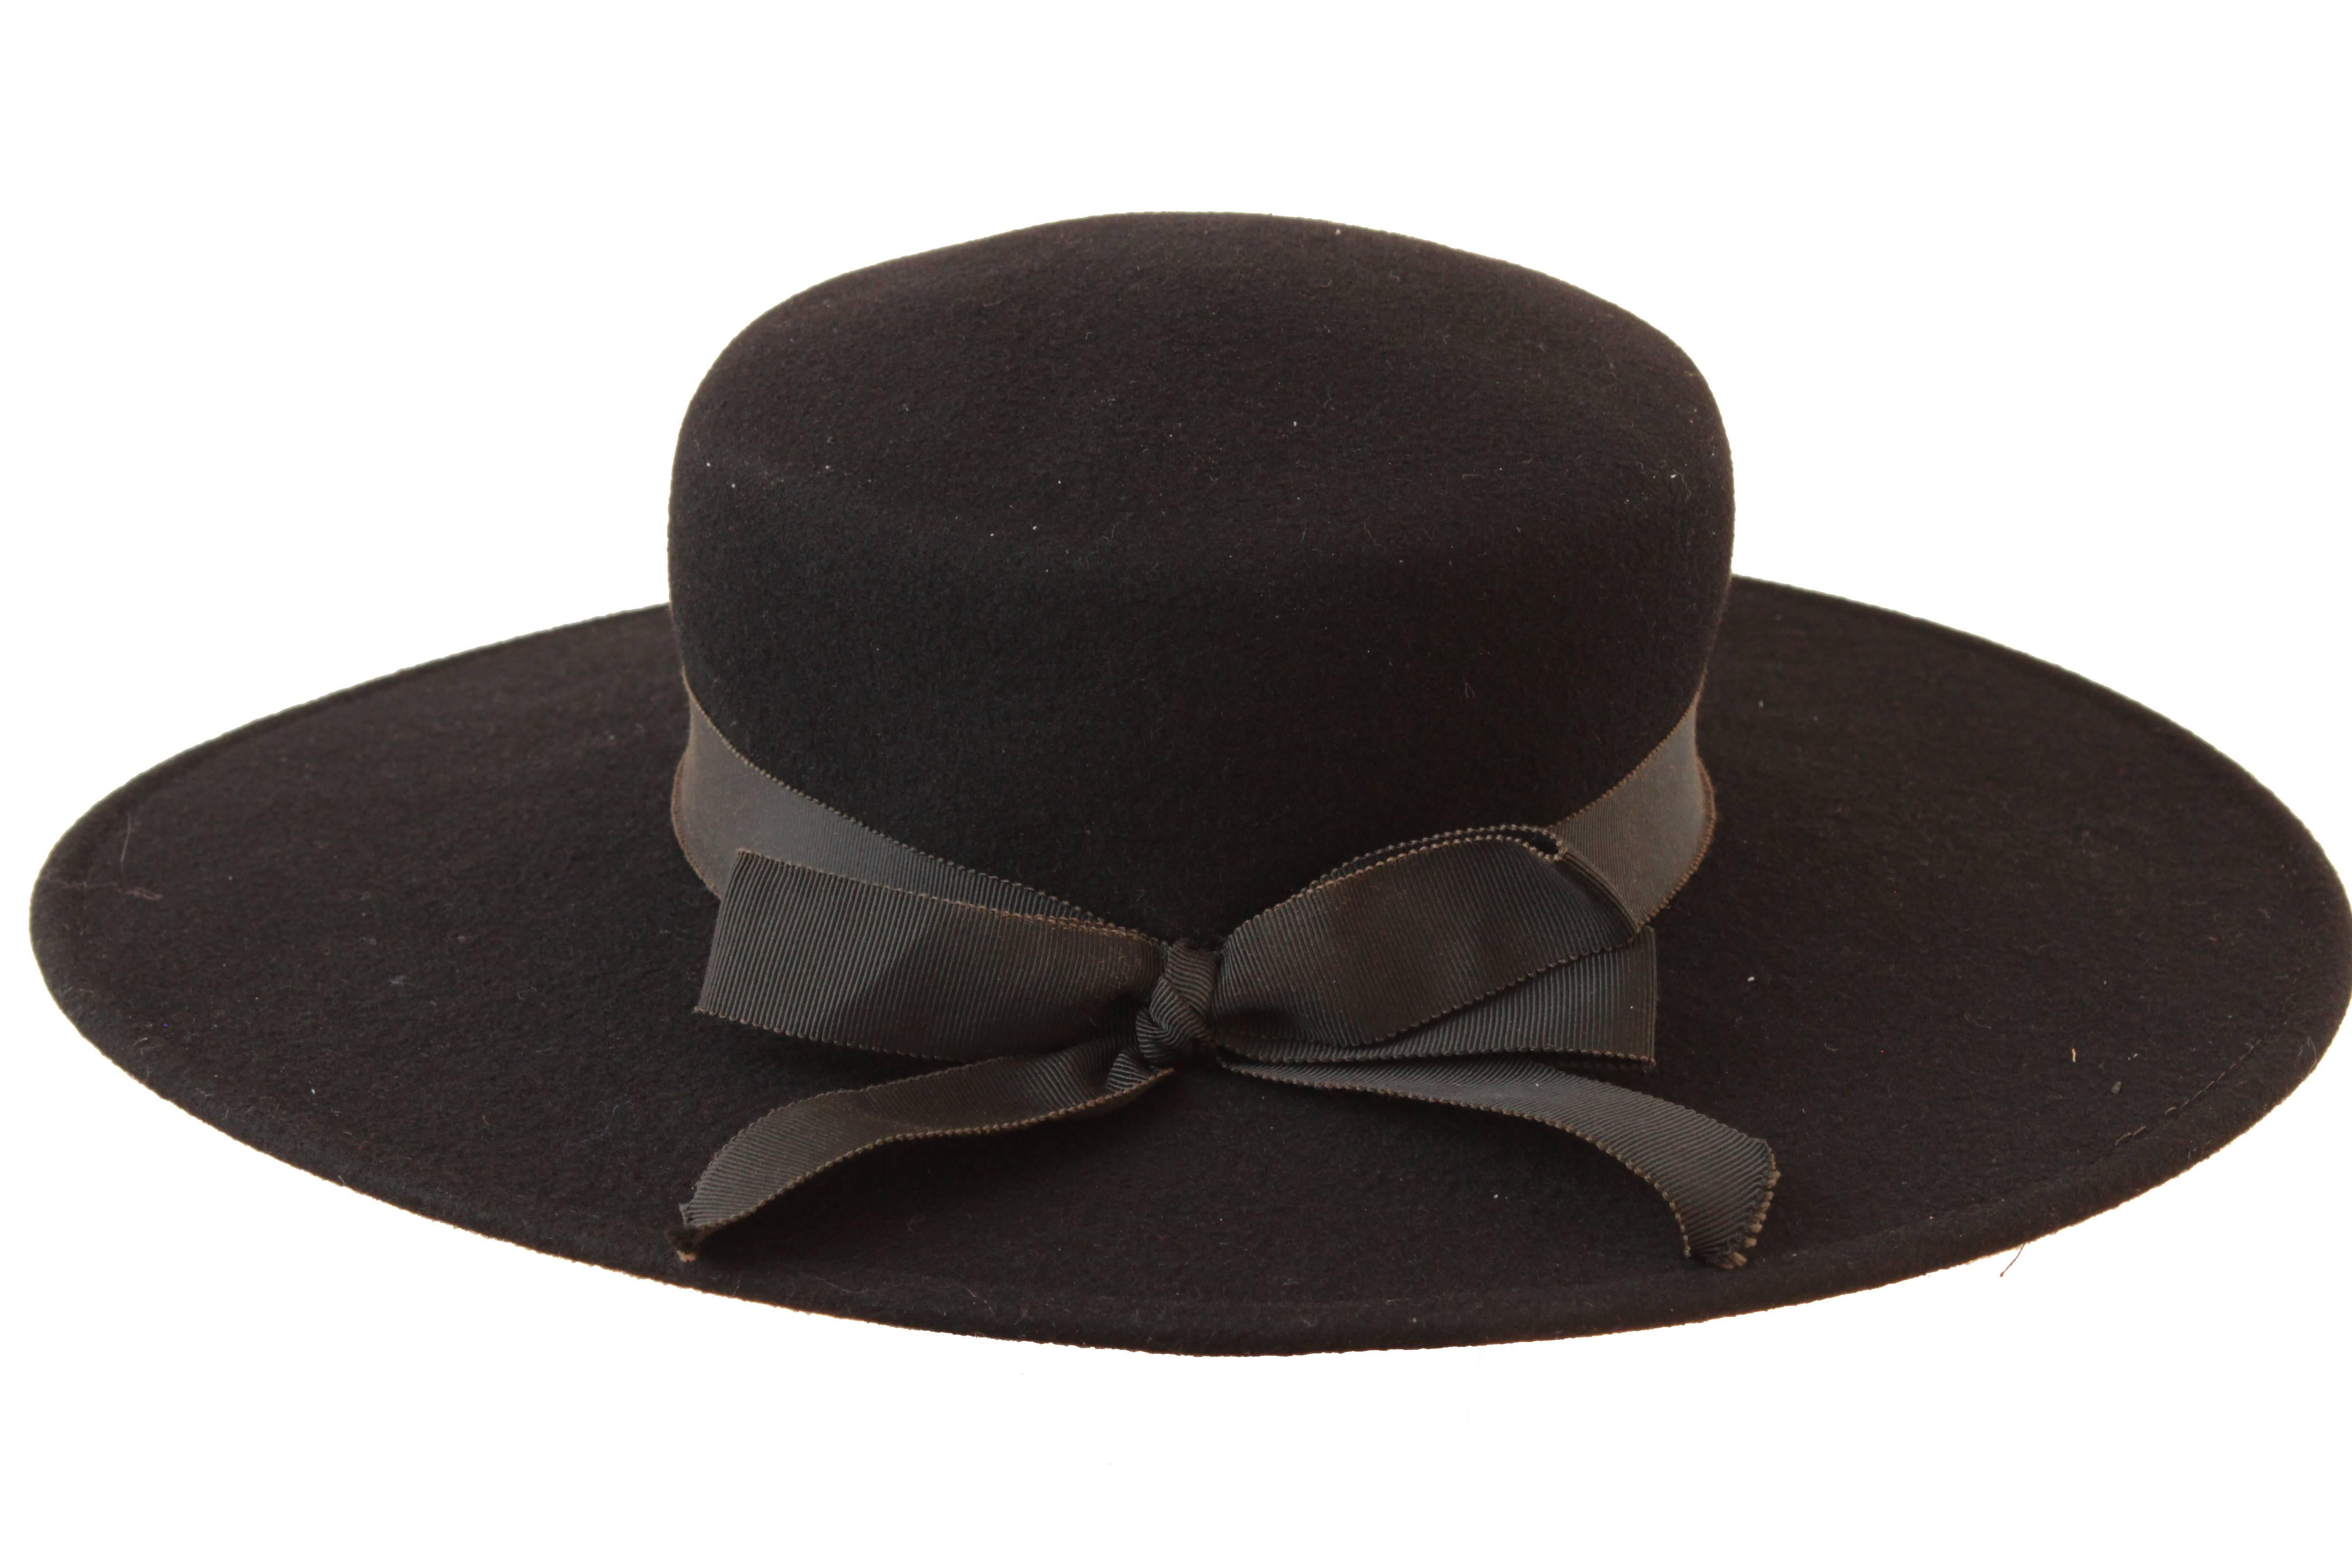 Women's 70s Yves Saint Laurent Wide Brim Hat Black Wool by Bollman Hat Co Sz S